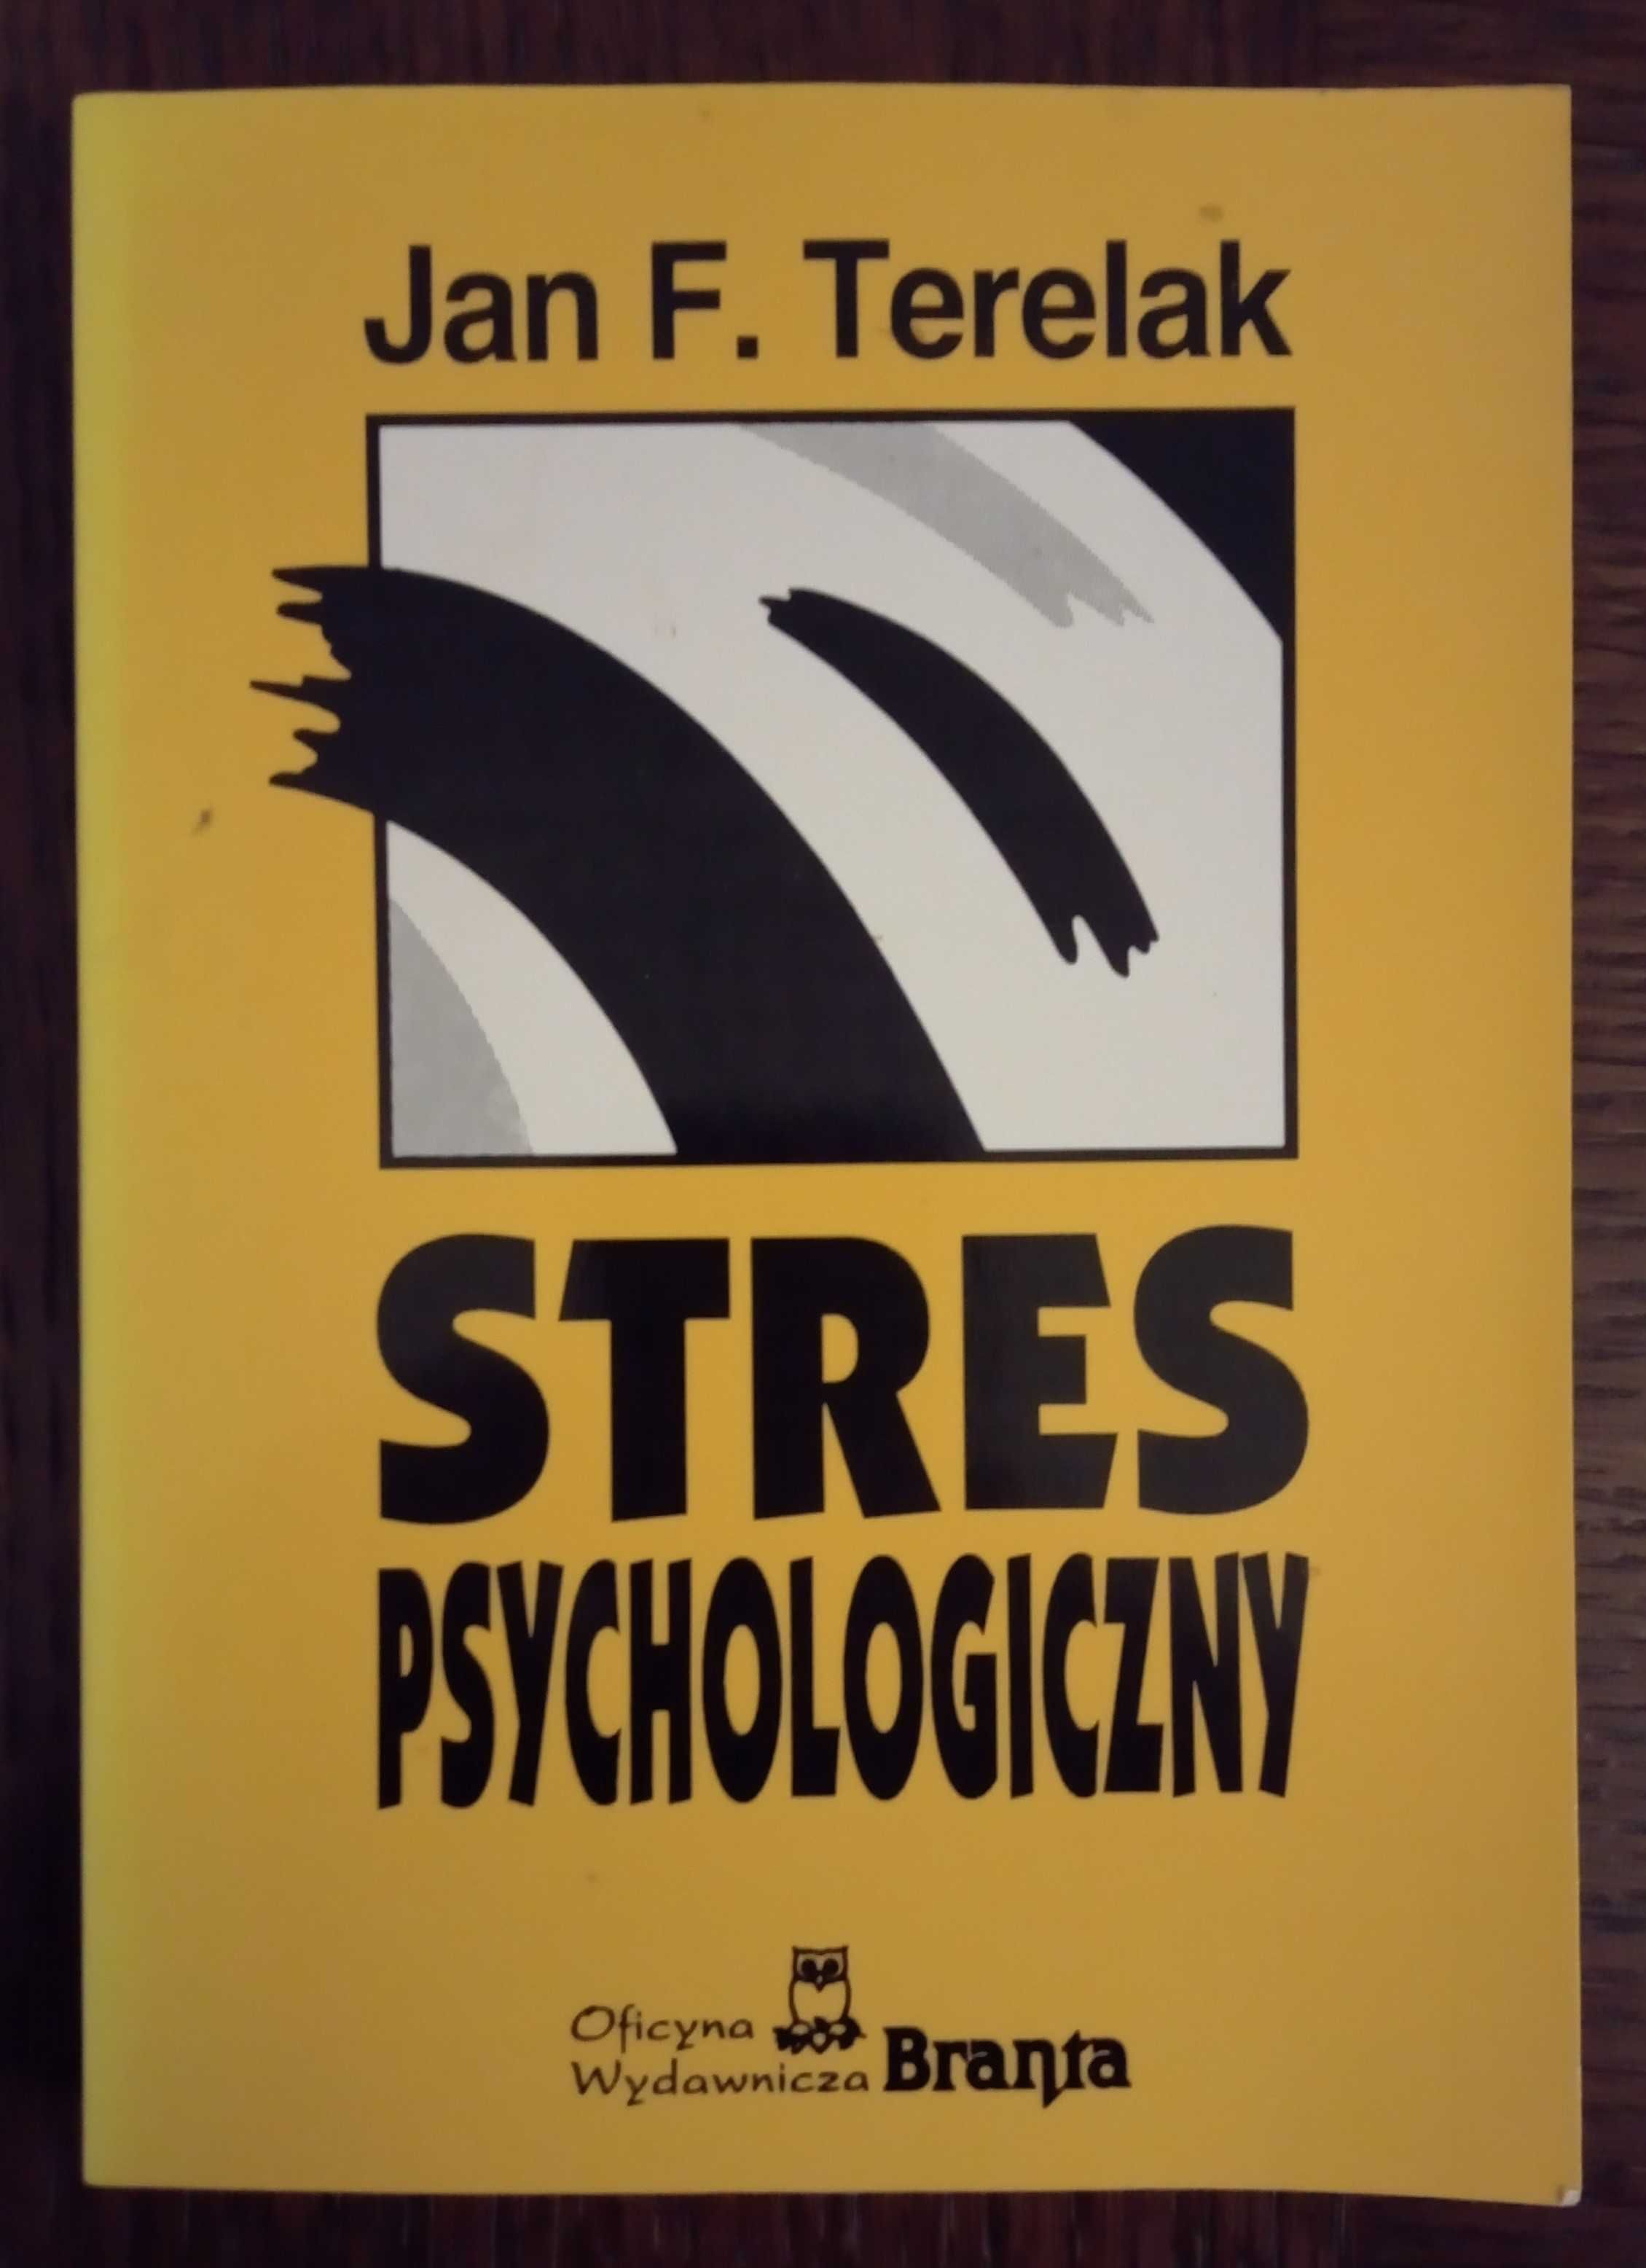 Stres psychologiczny - Jan F. Terelak